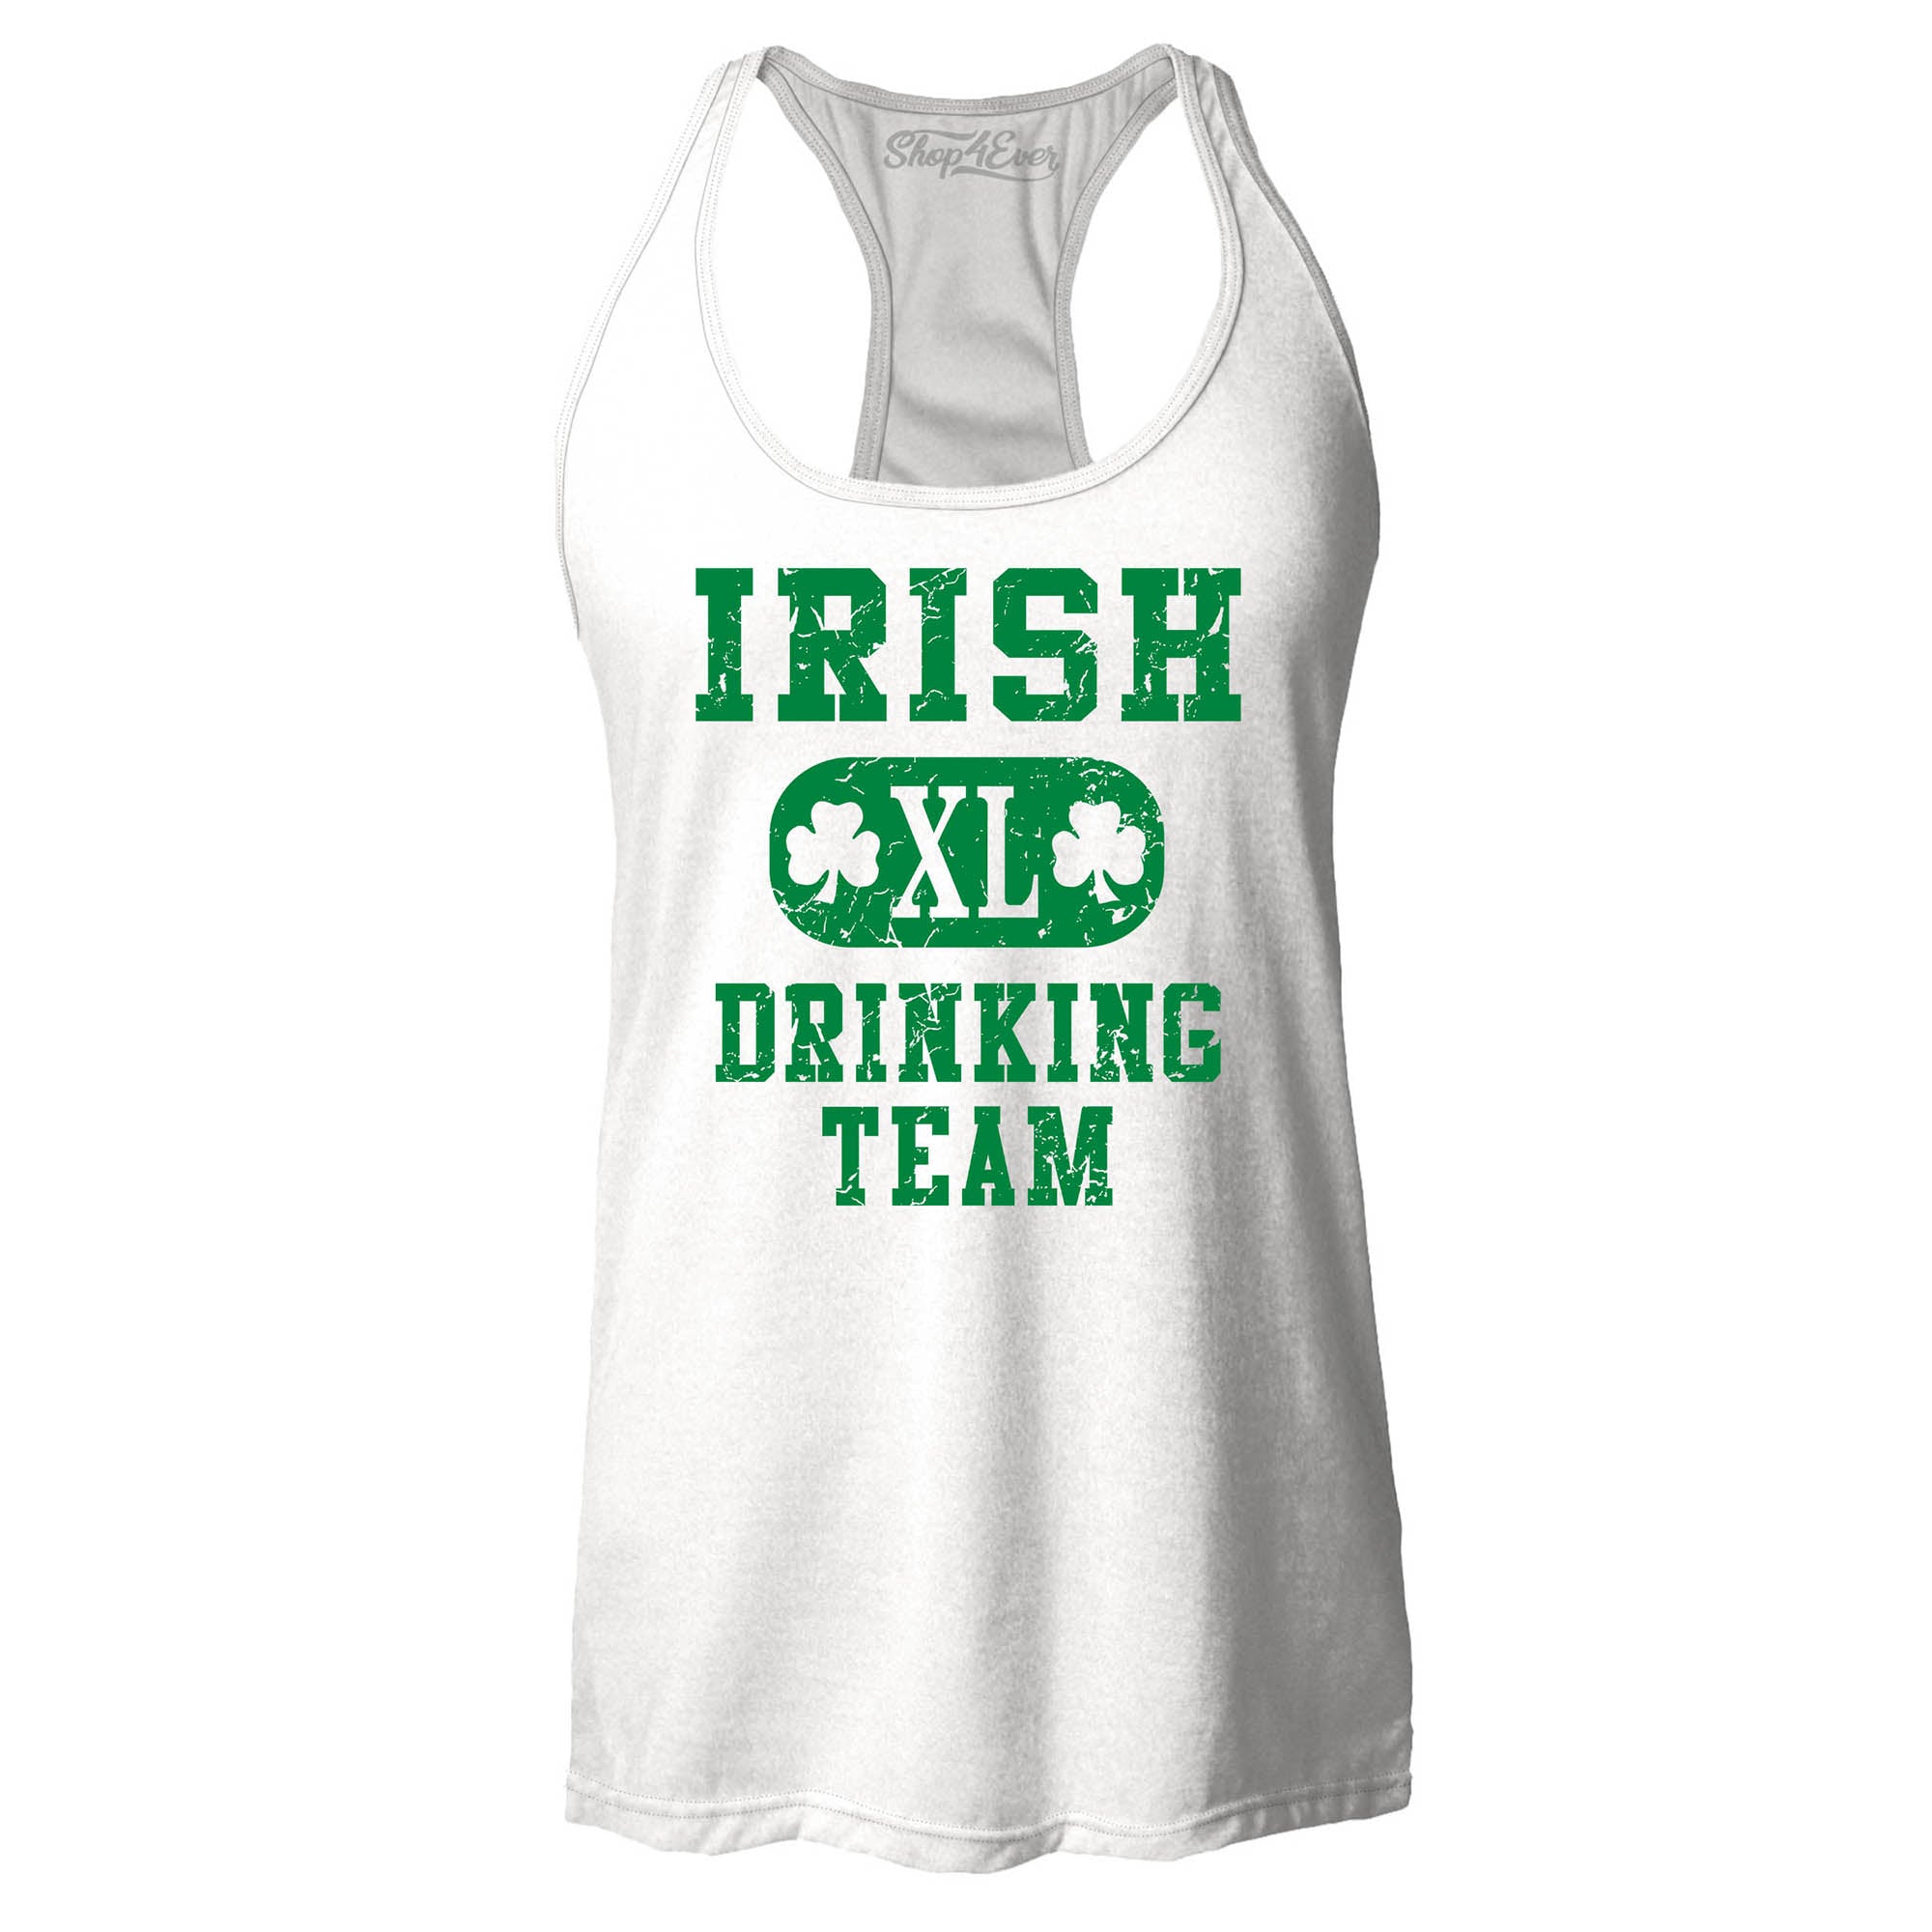 Irish Drinking Team Women's Racerback St. Patrick's Day Tank Tops Slim FIT